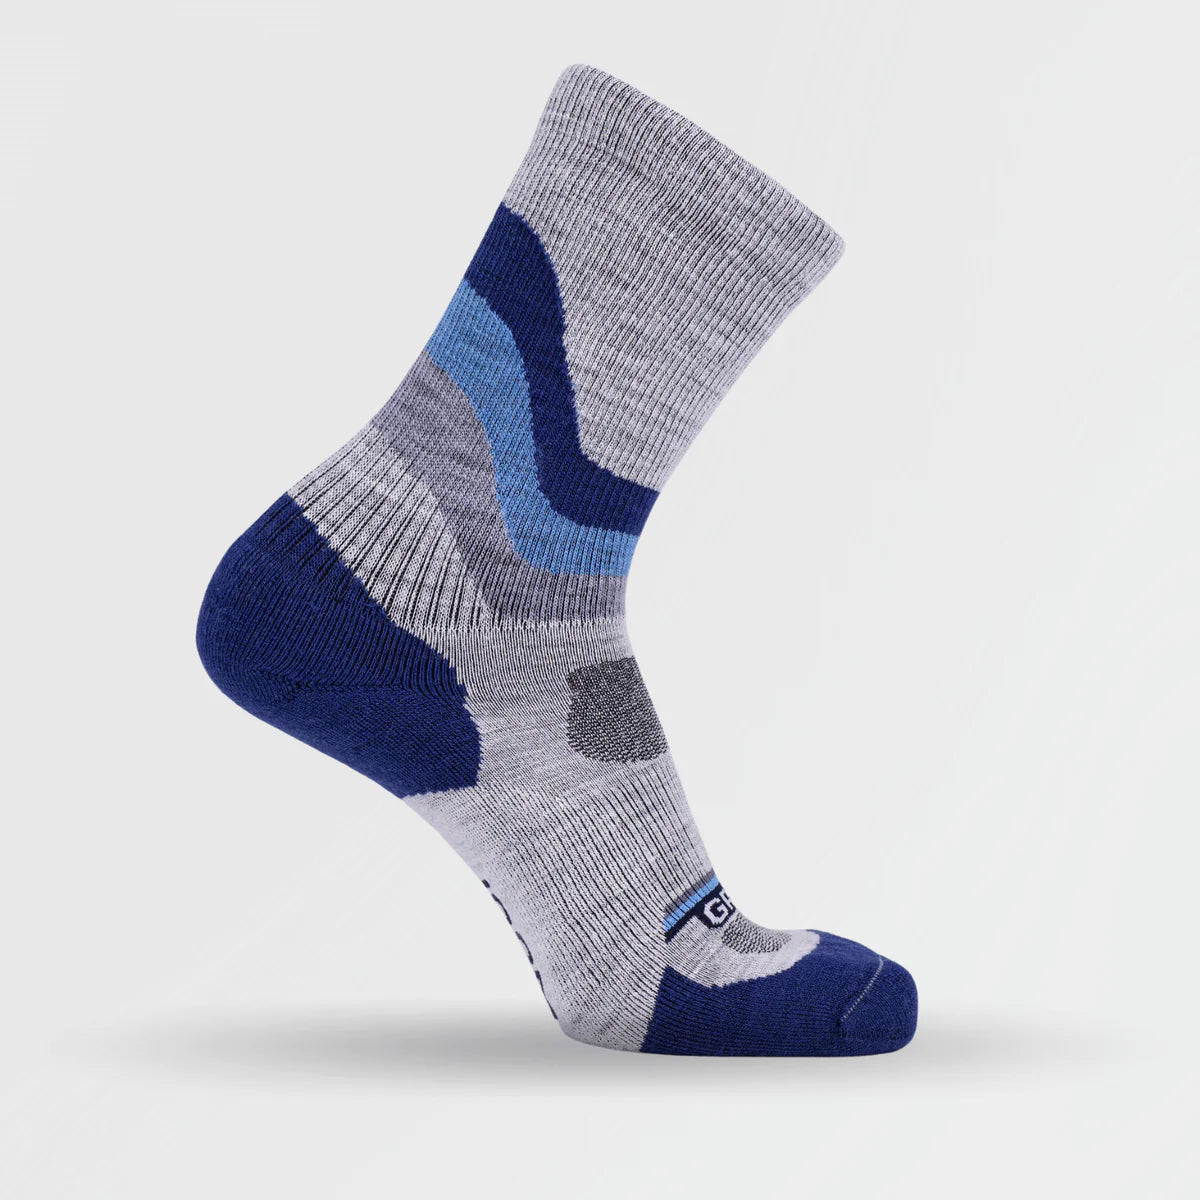 Grip6 Wool Crew Socks - Made In USA